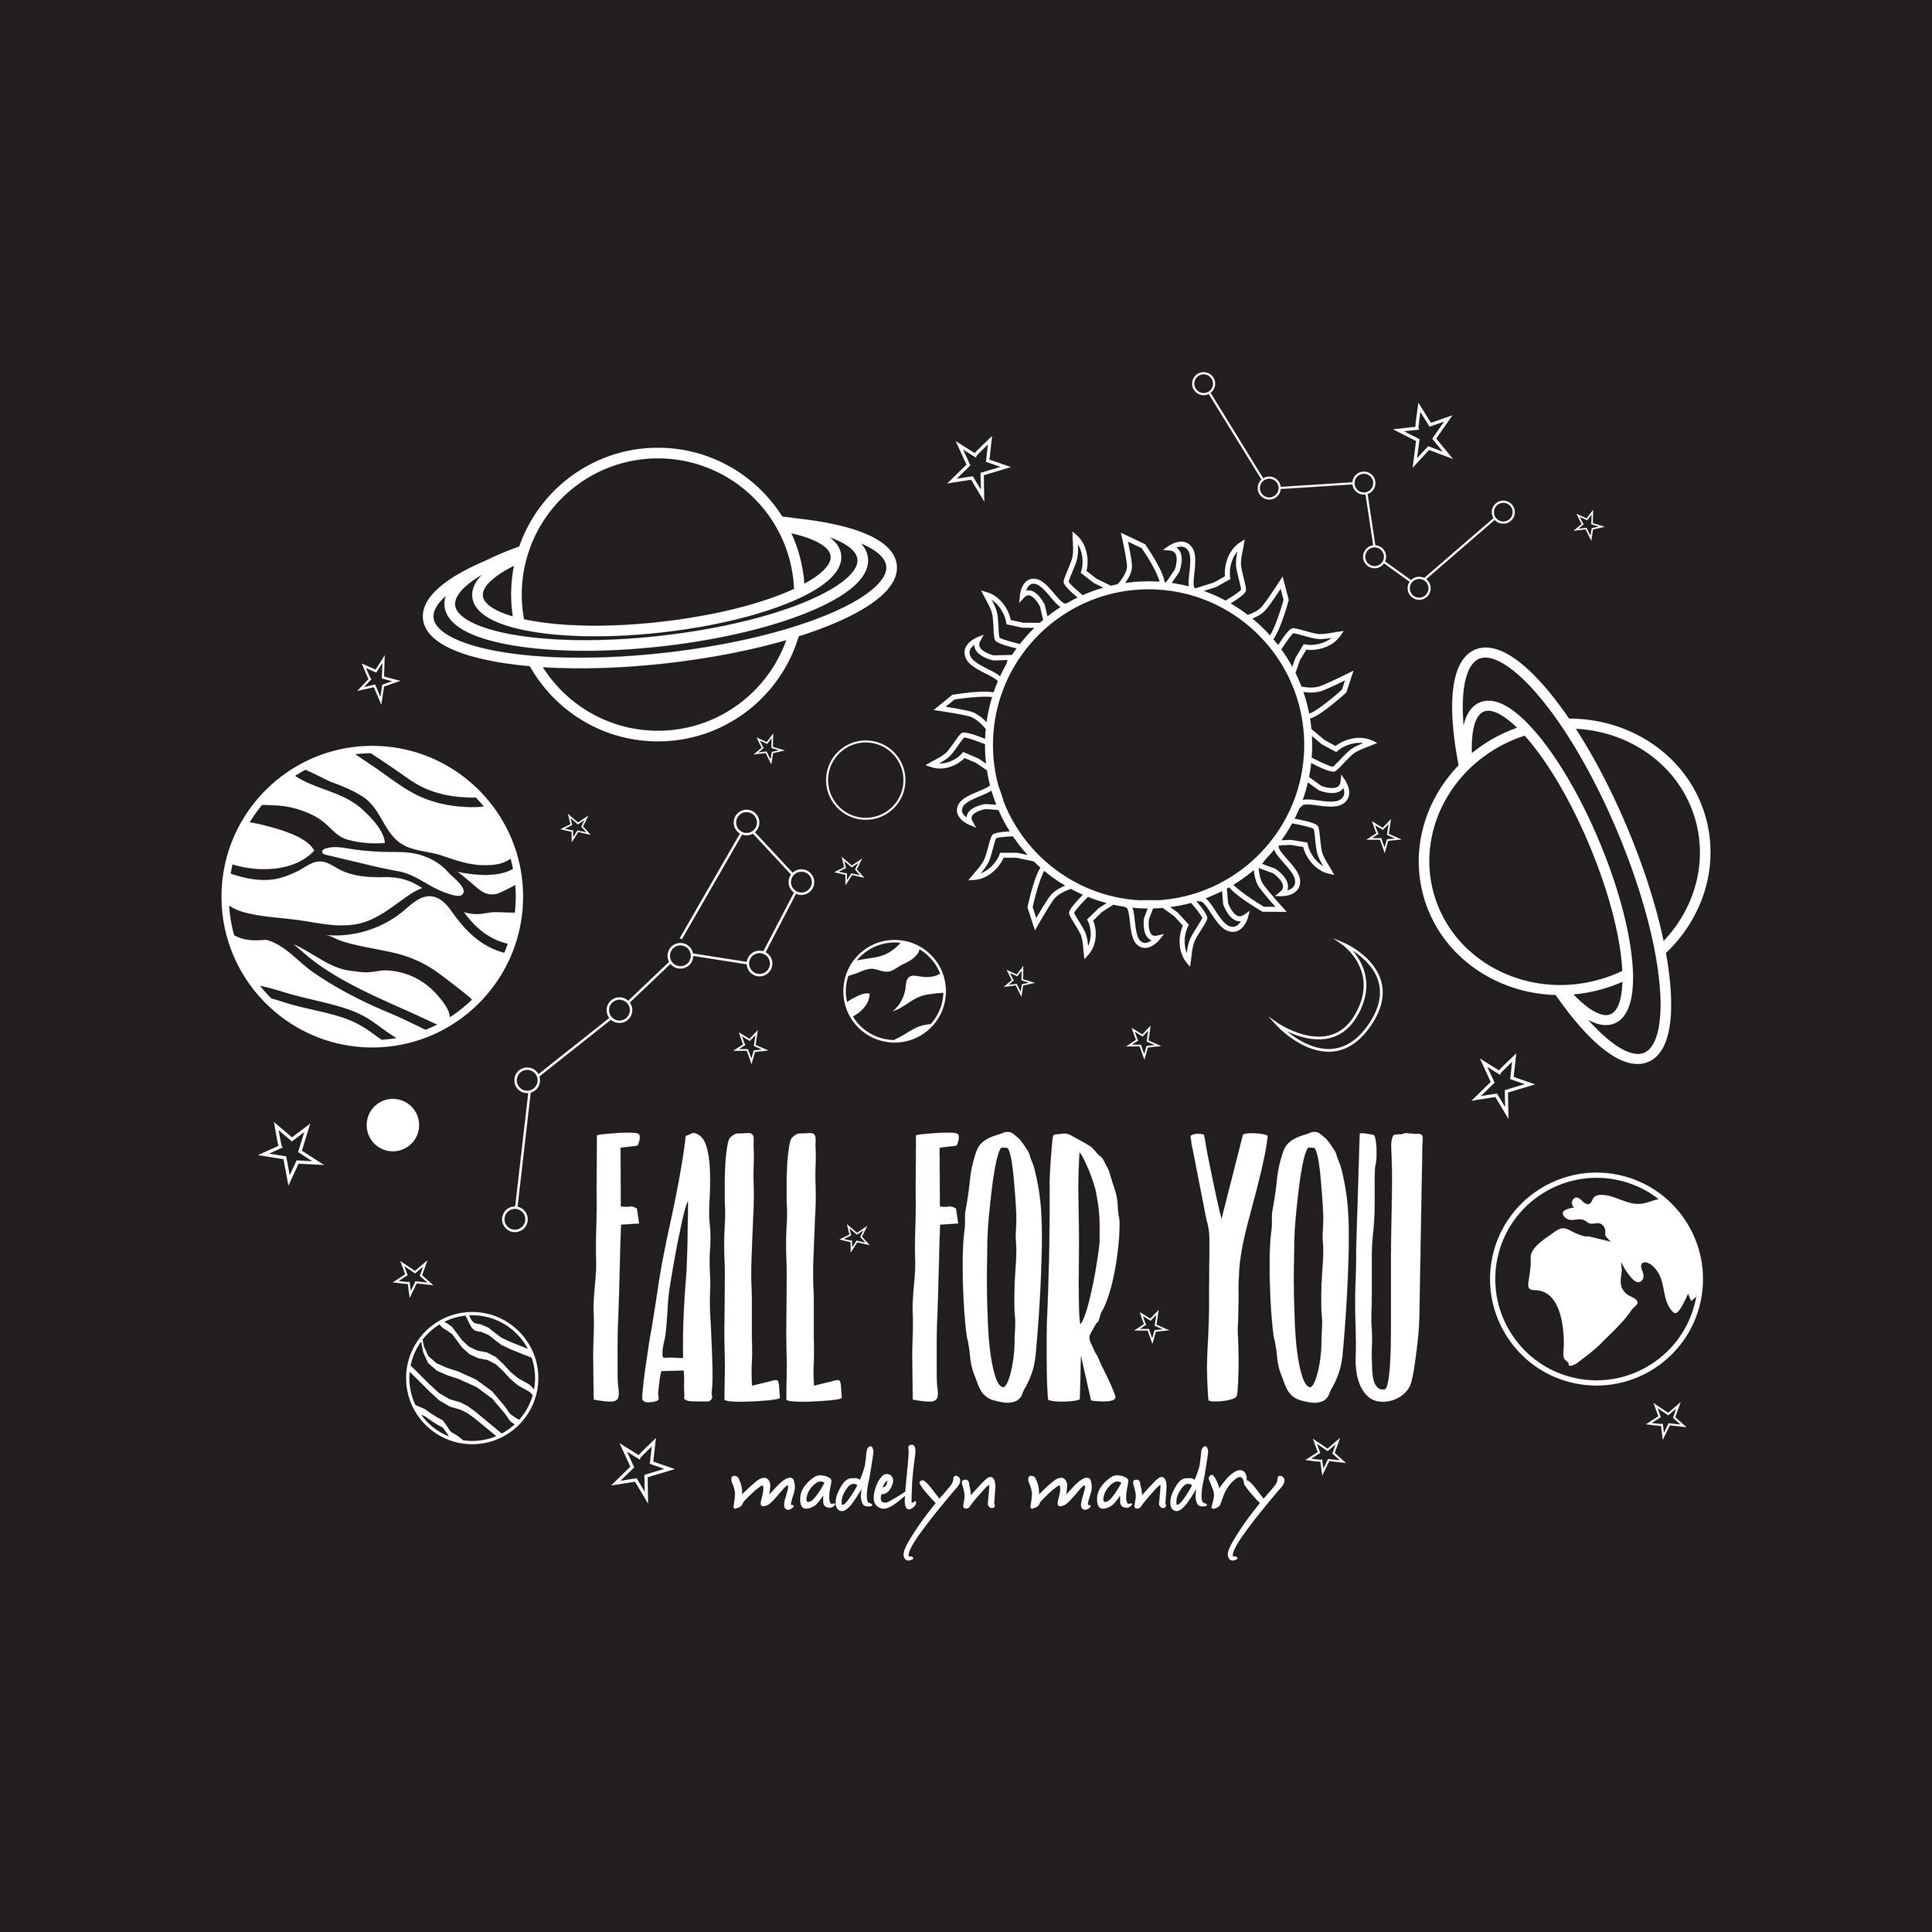 Fall For You Design.jpg